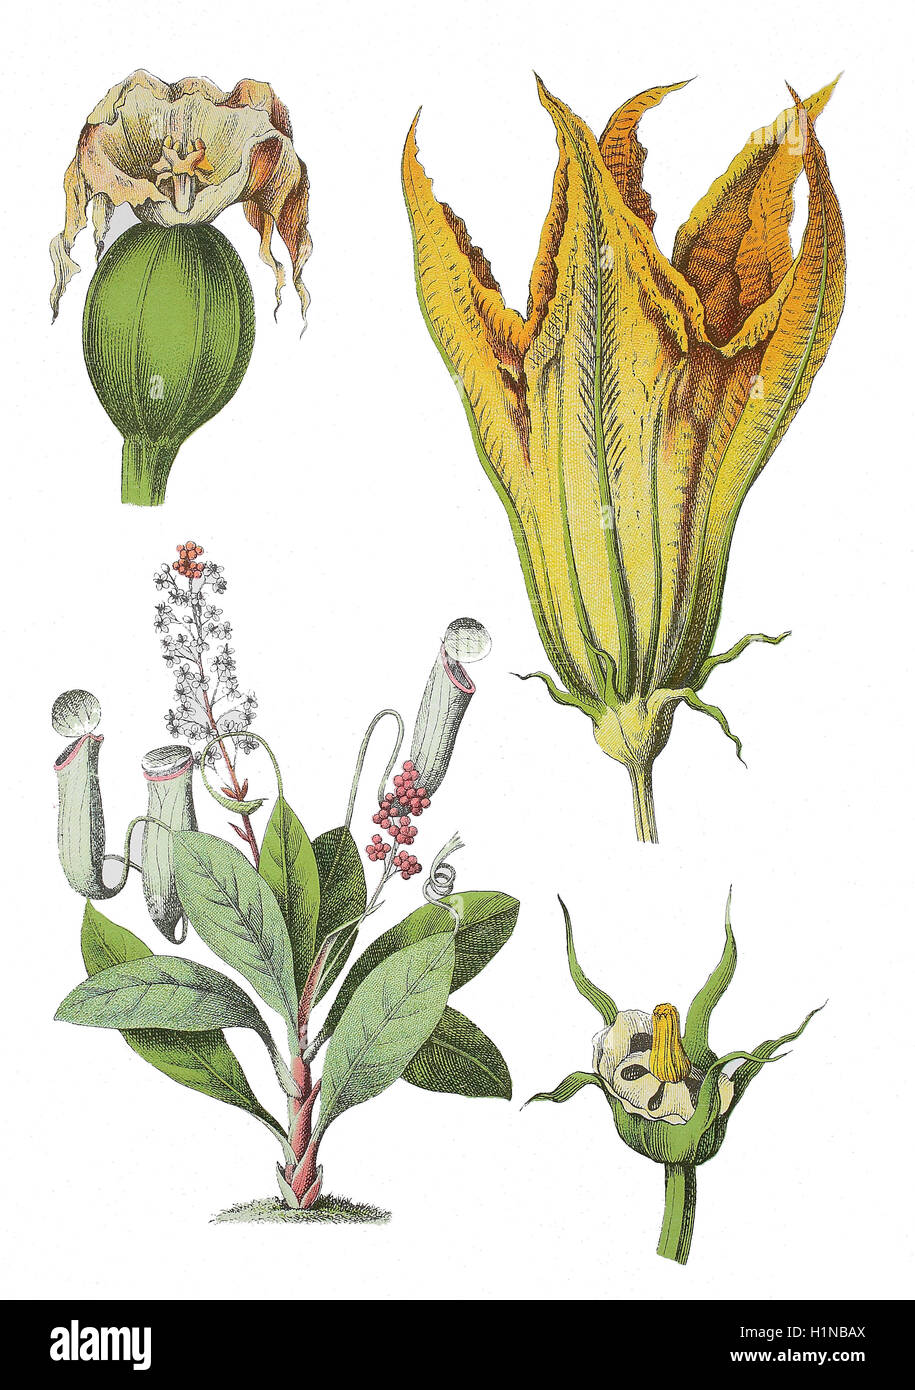 Common Swamp Pitcher-Plant, Nepenthes mirabilis (bottem left), Pumpkin, Cucurbita pepo (right) Stock Photo